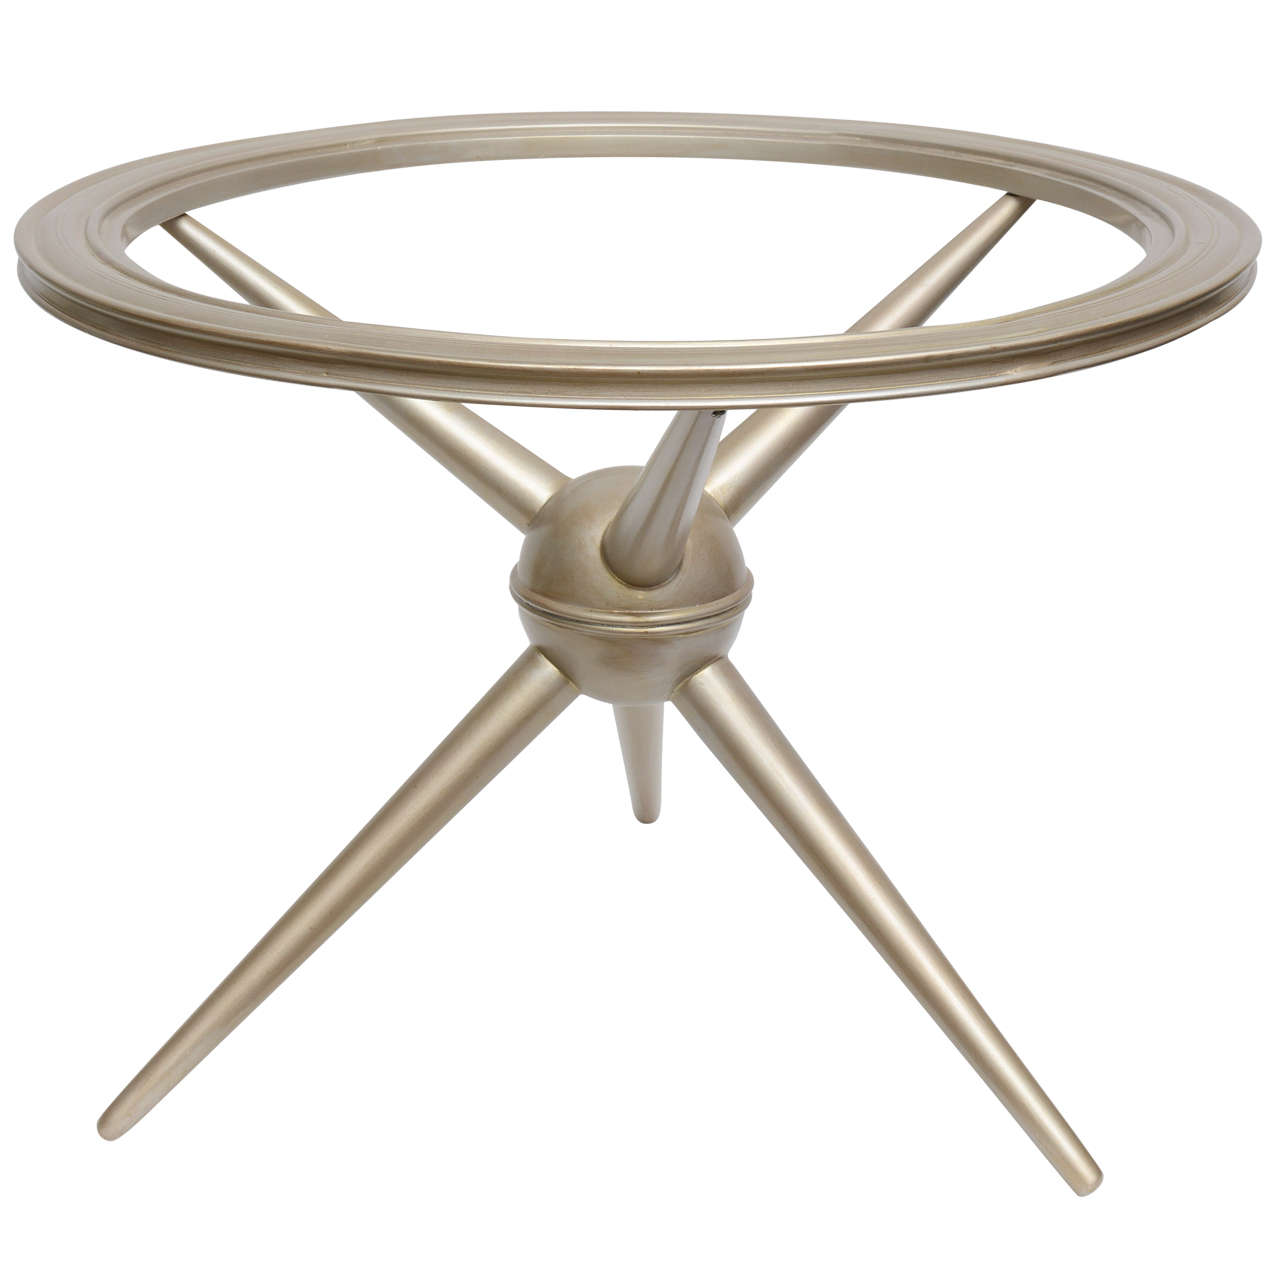 Italian Space Age Mid-Century Modern Sputnik Wood Glass Side Table